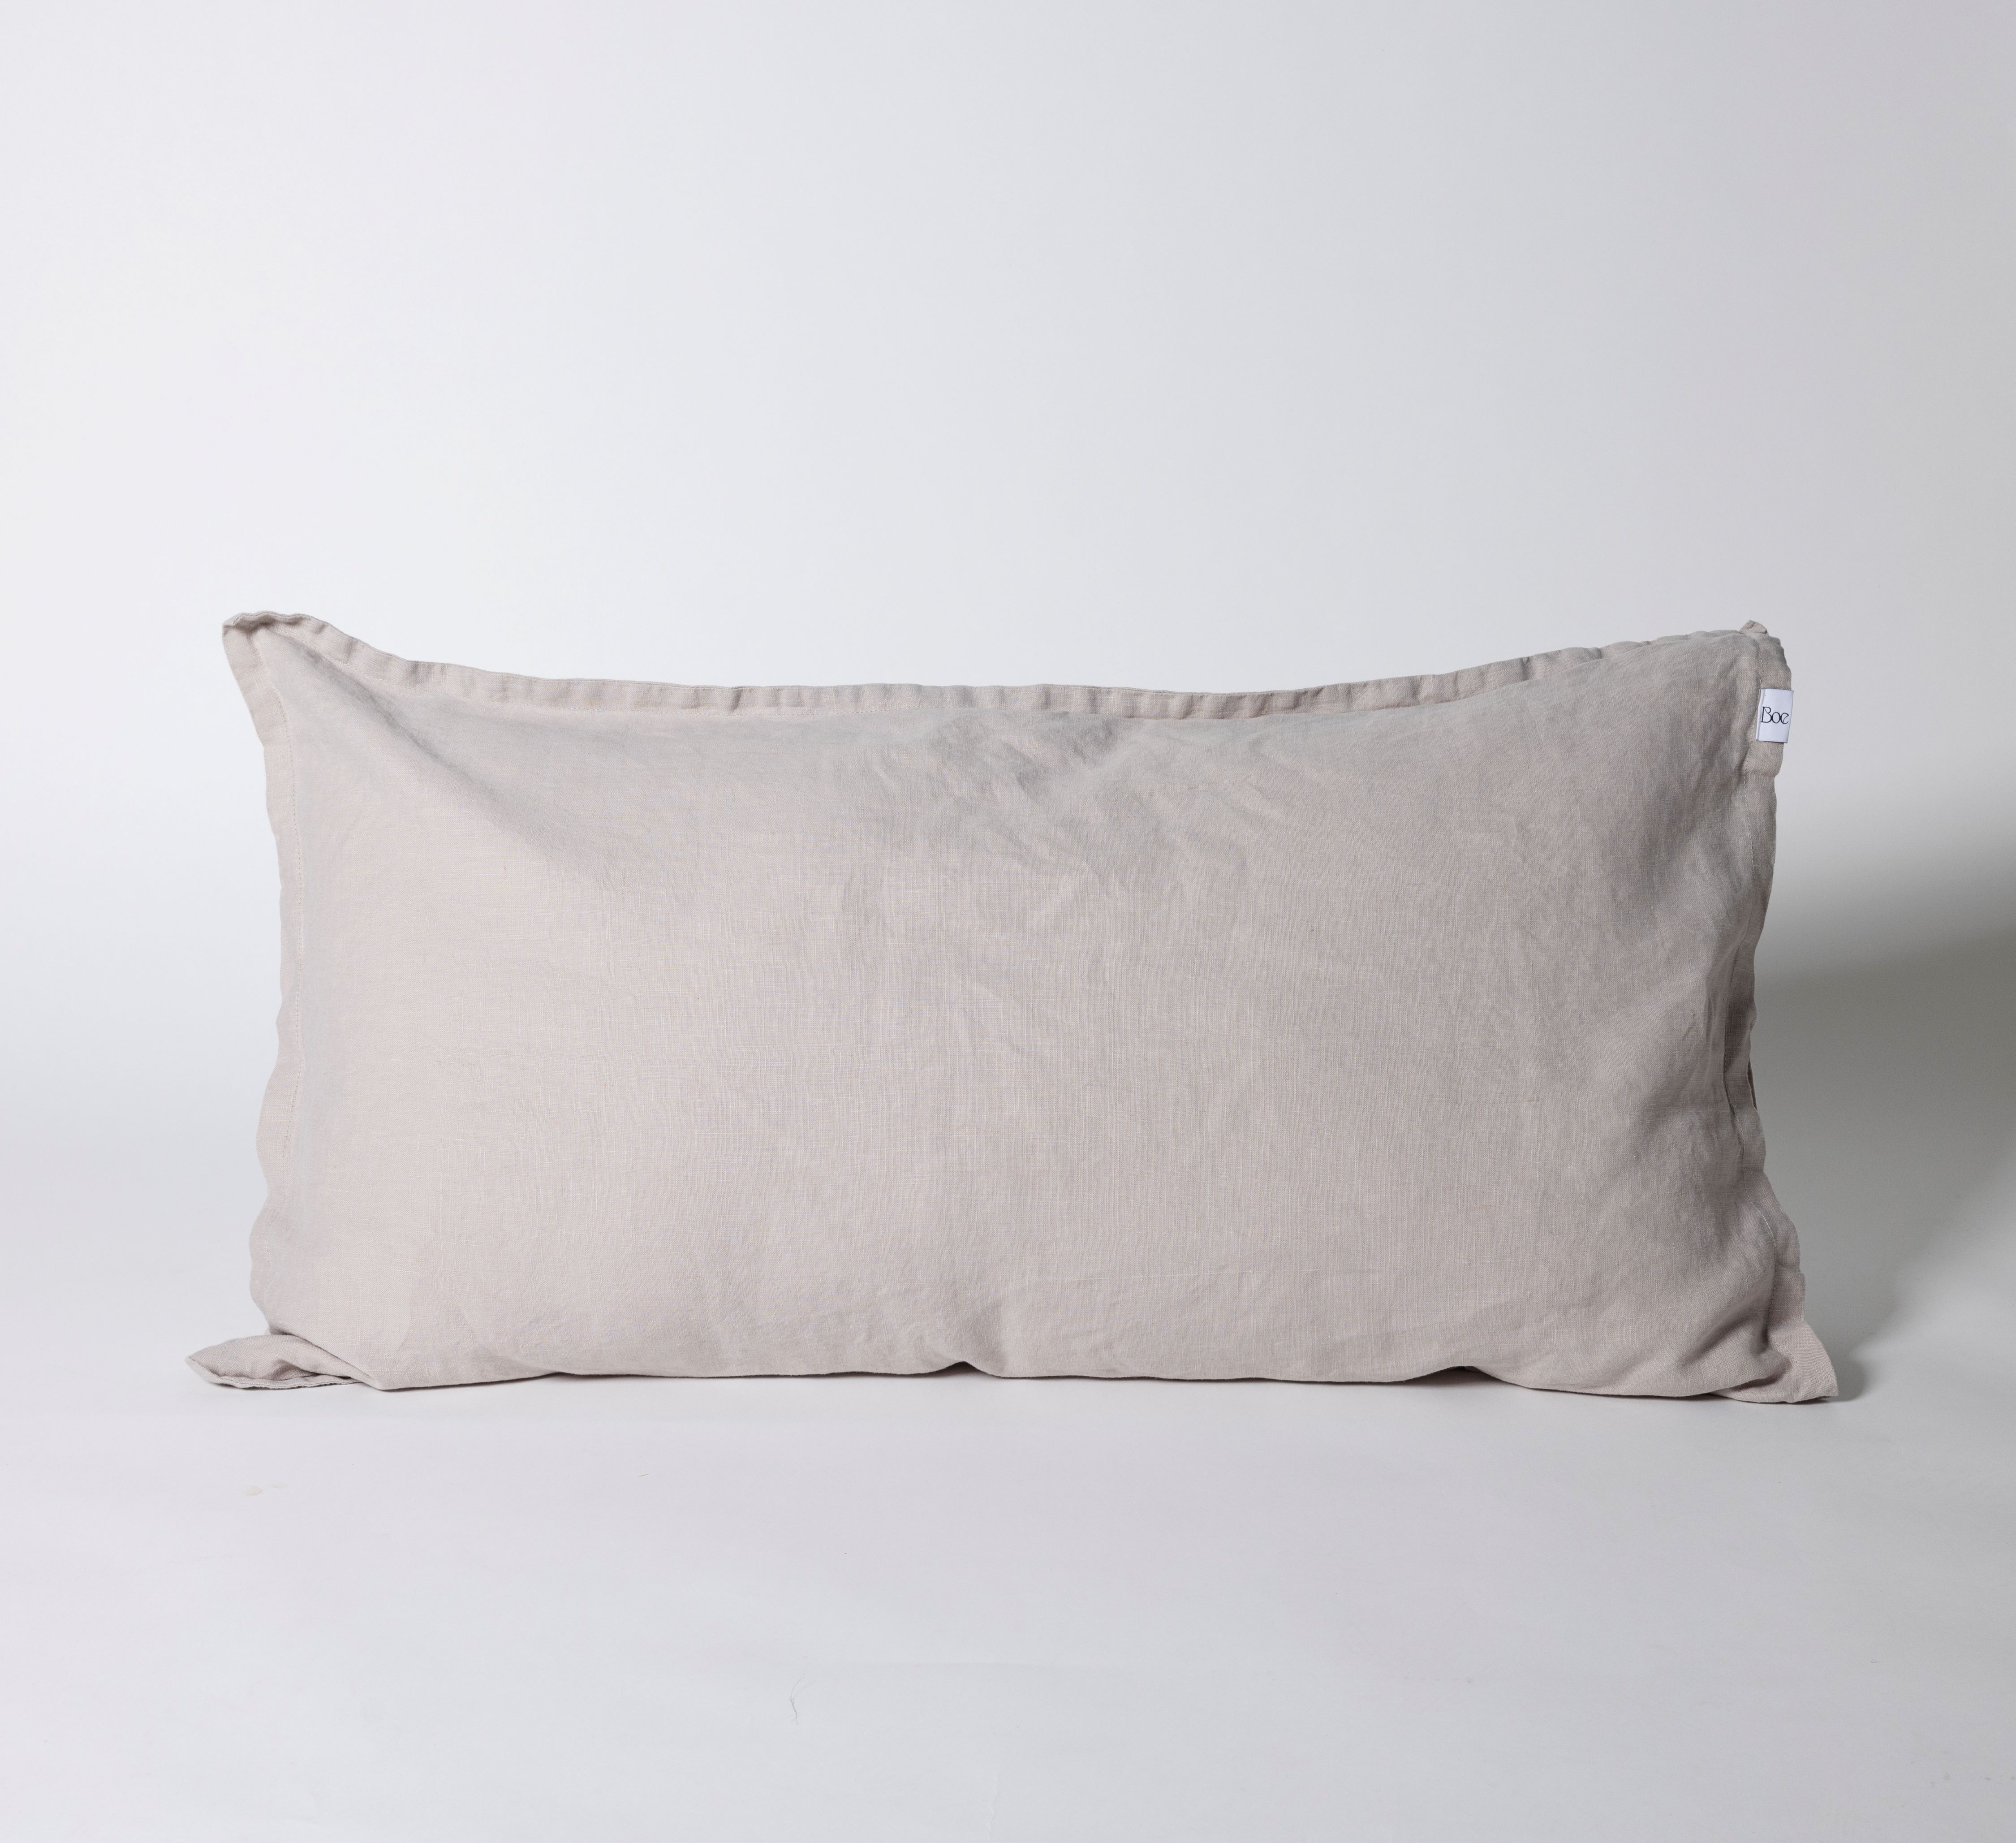 Harpers Hideout - Pillow case 50x90 Linen